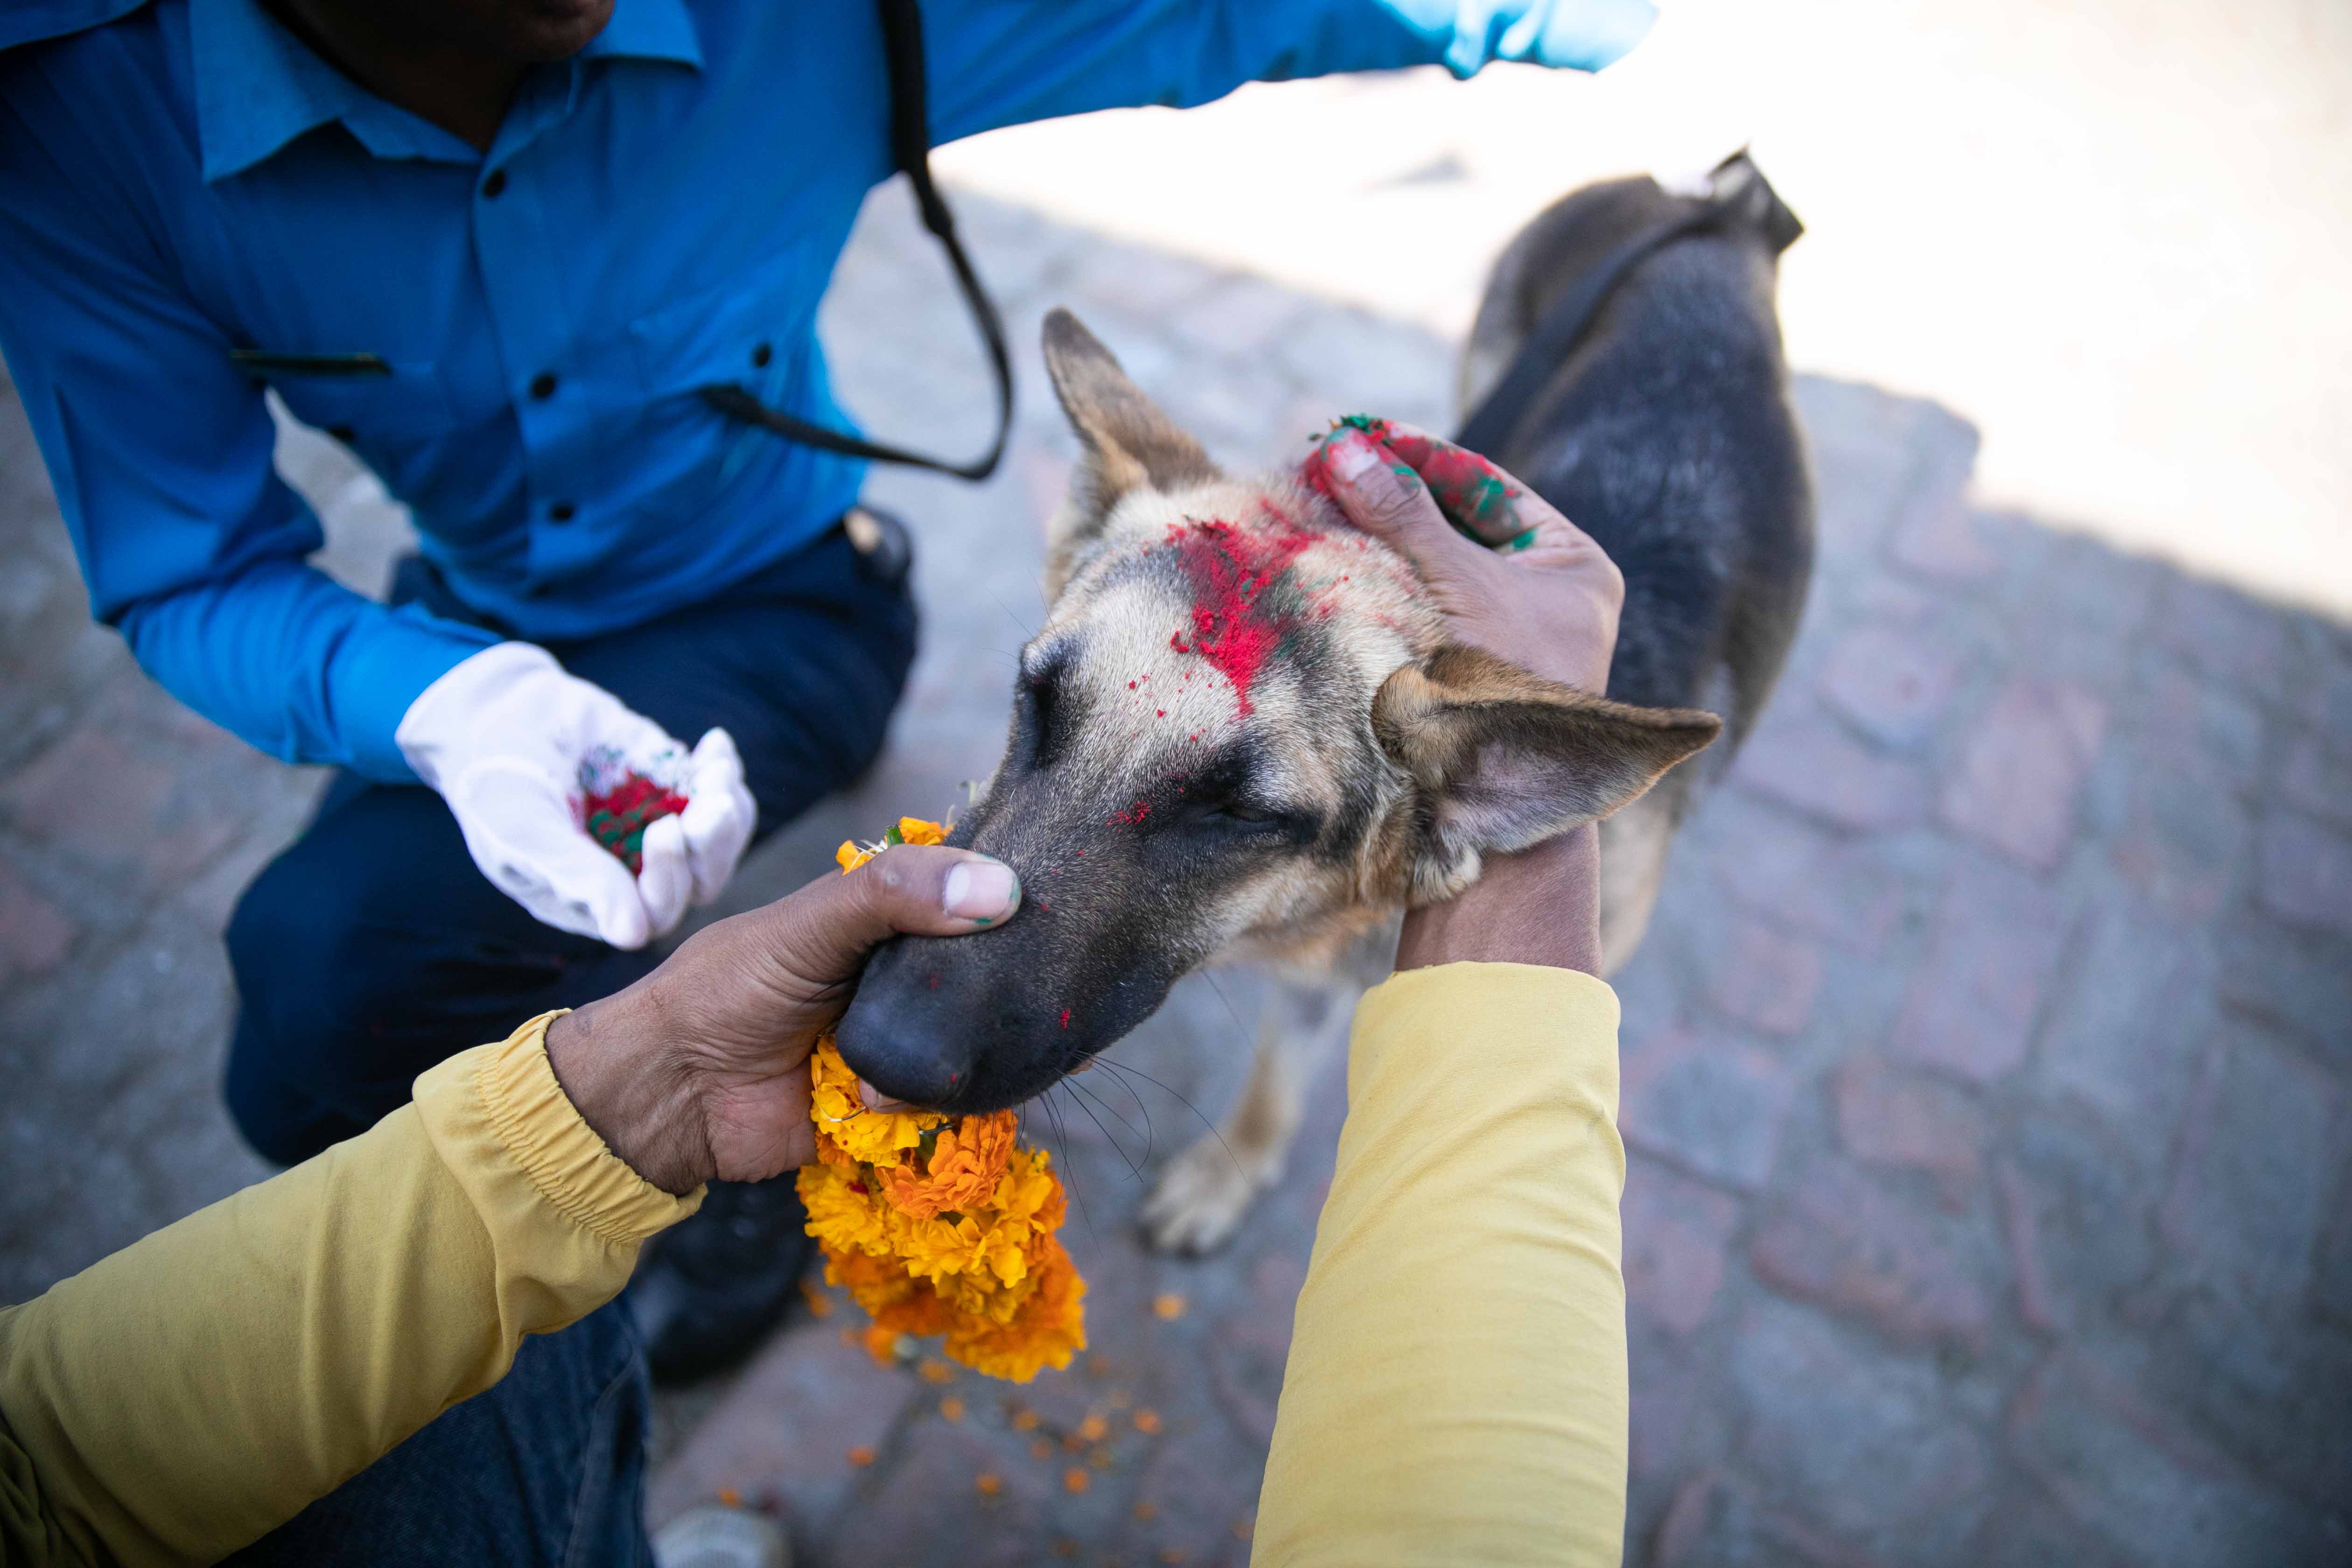 Nepal police dog festival-Nepal Photo Library  (15)1666603857.JPG